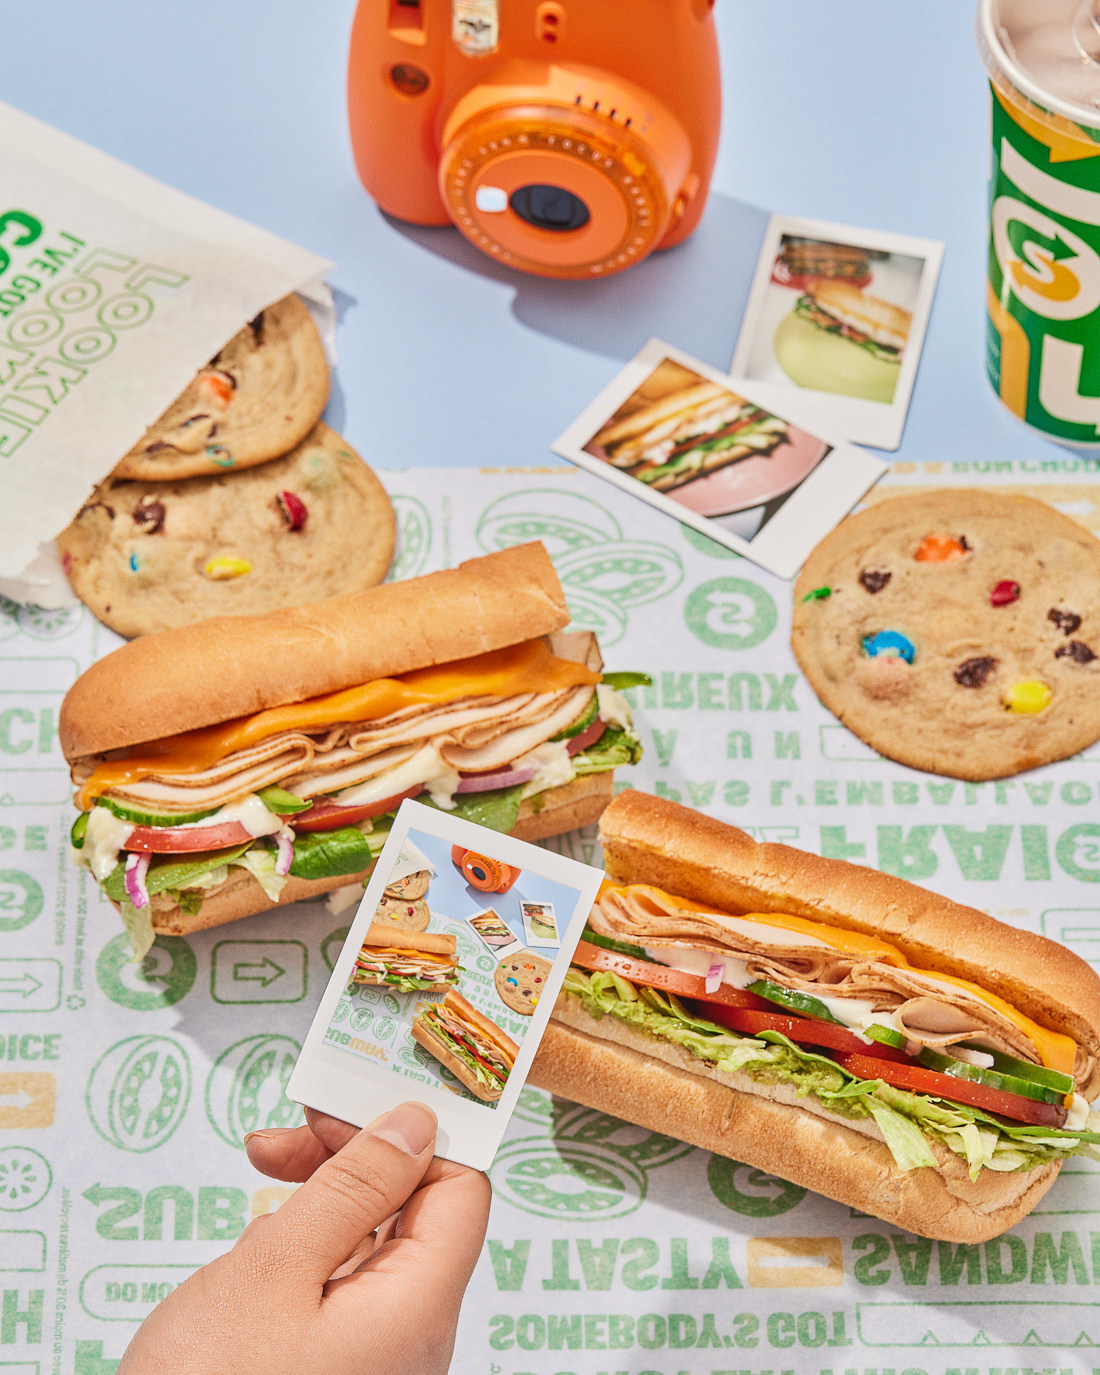 Subway Hits Refresh on Eat Fresh with New Sandwiches, Athletic Partnerships